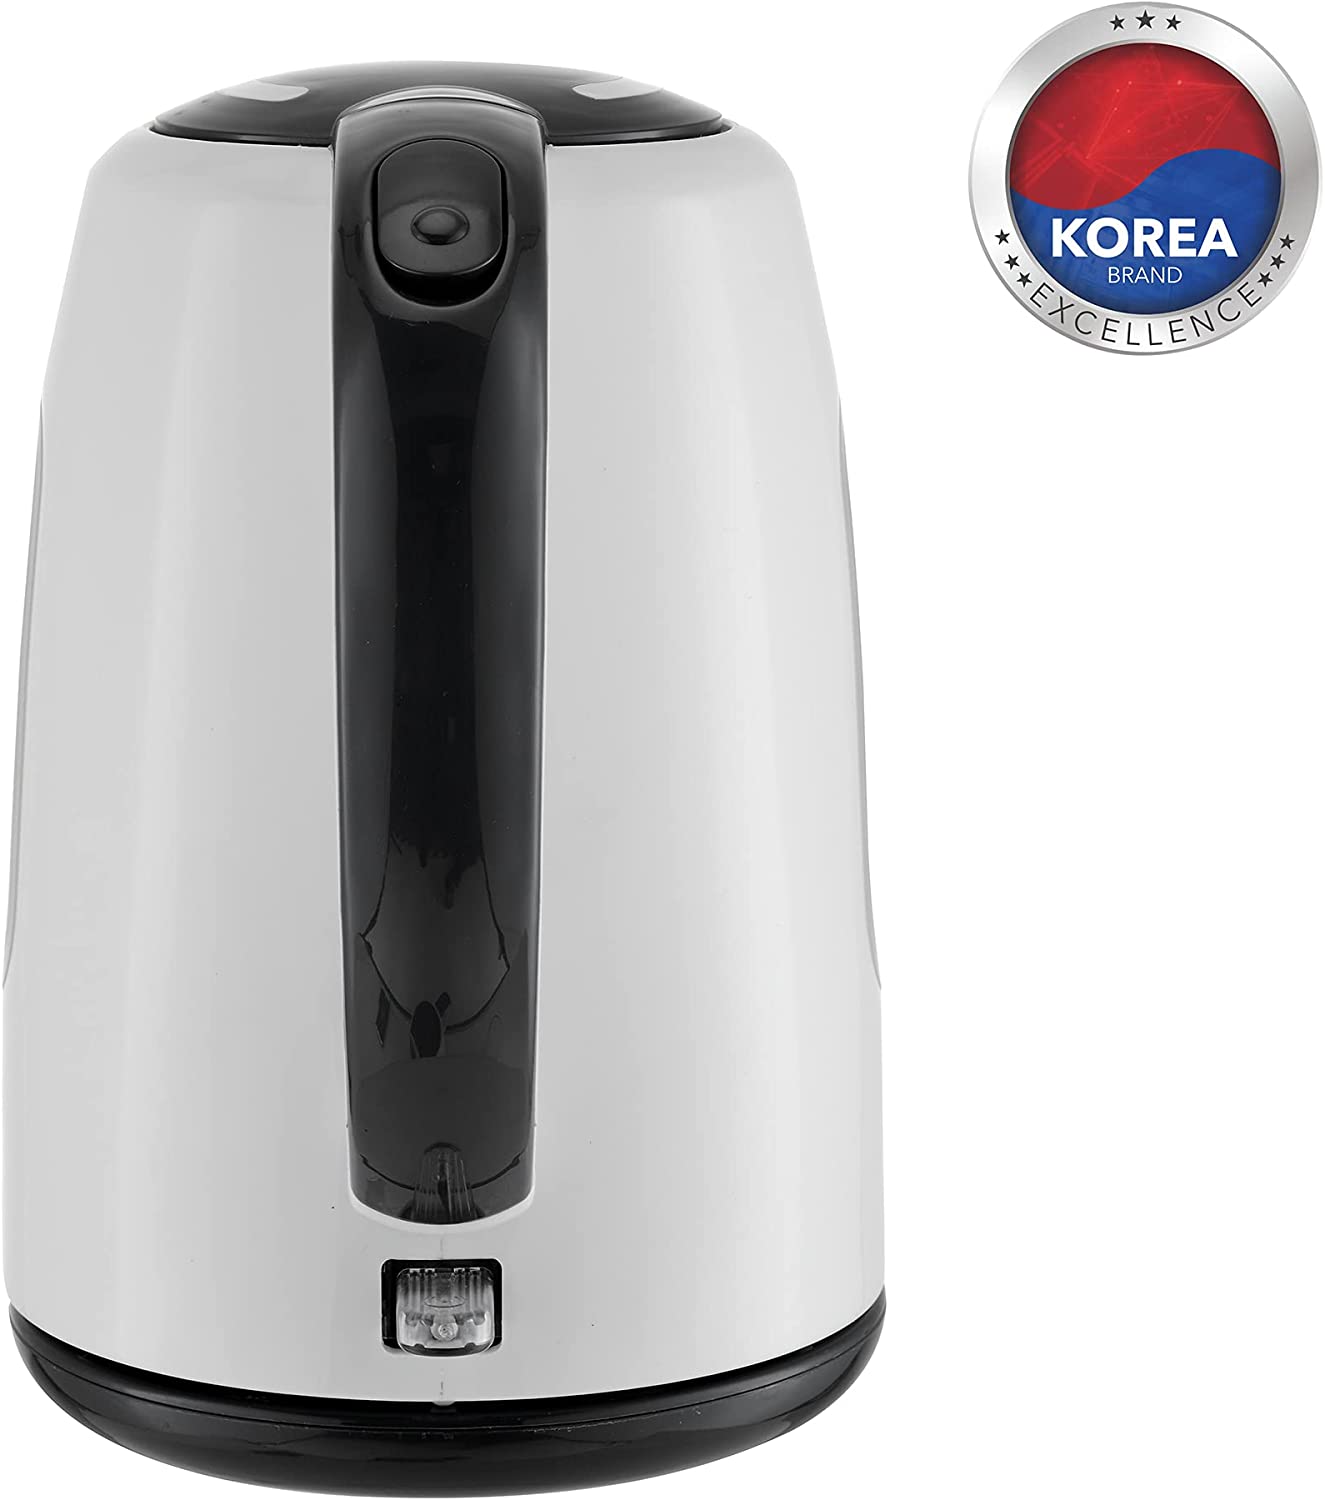 1.7 Liter Electric Kettle 2200W Korean Technology